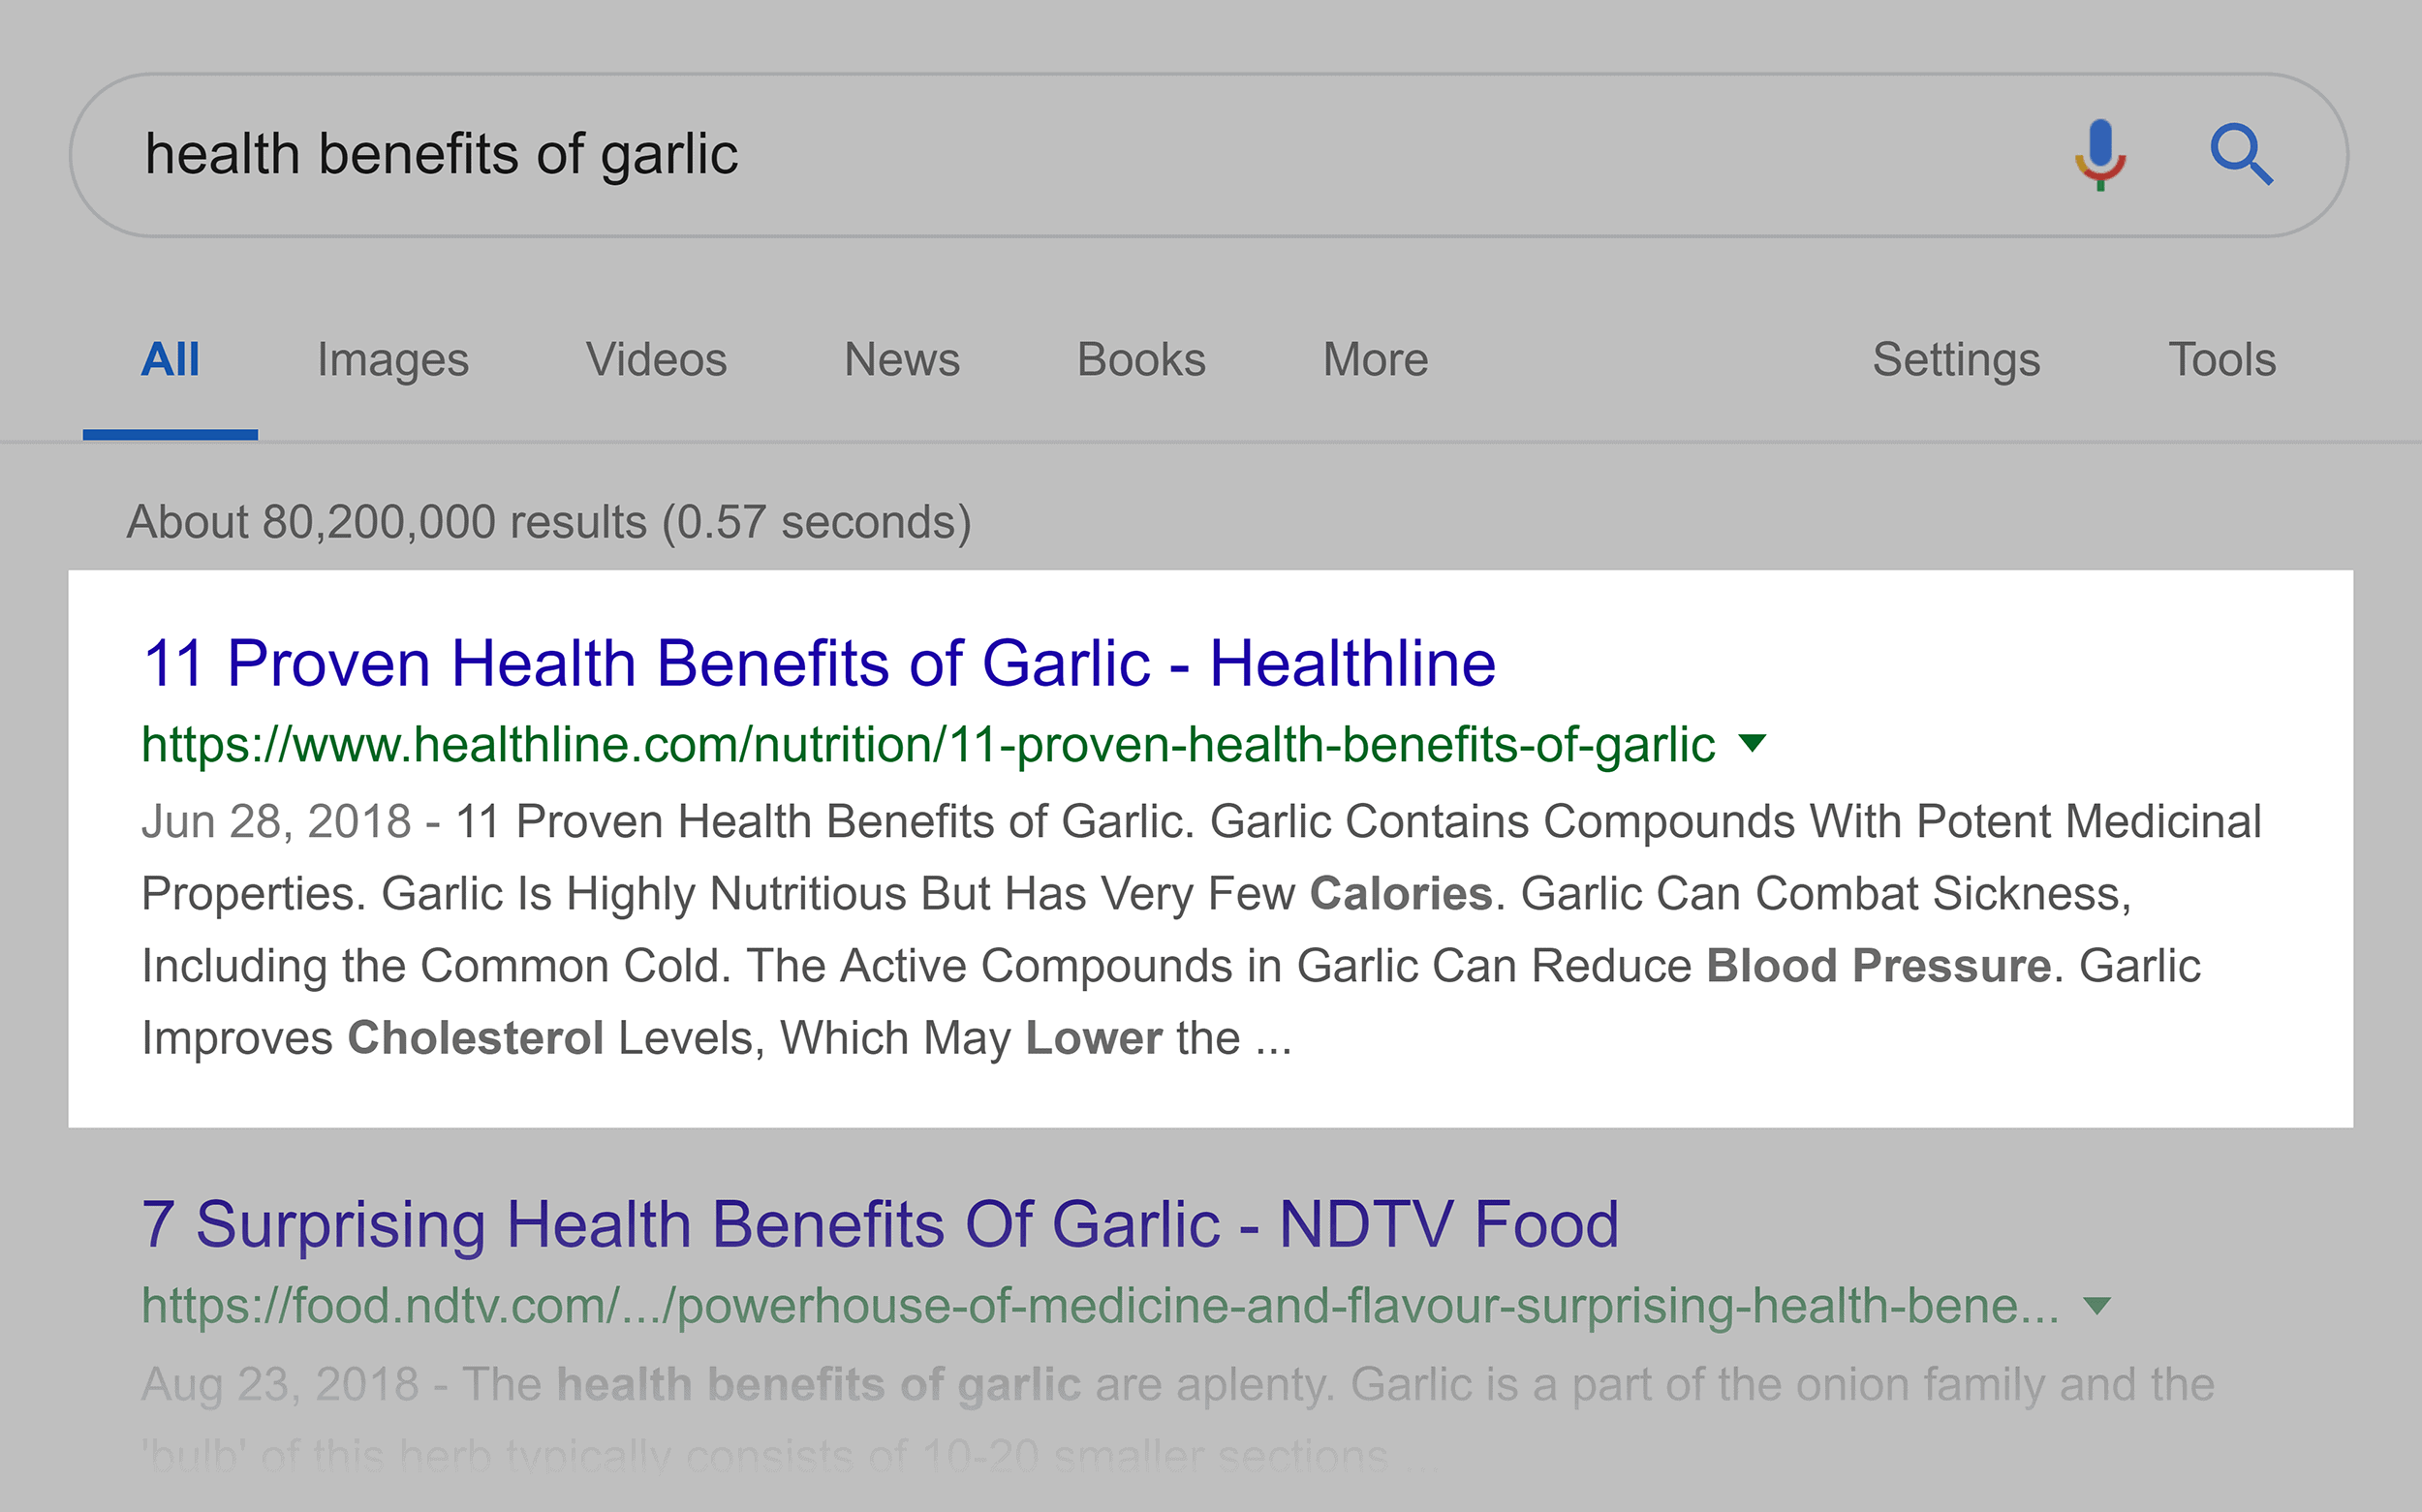 Google search – "health benefits of garlic"